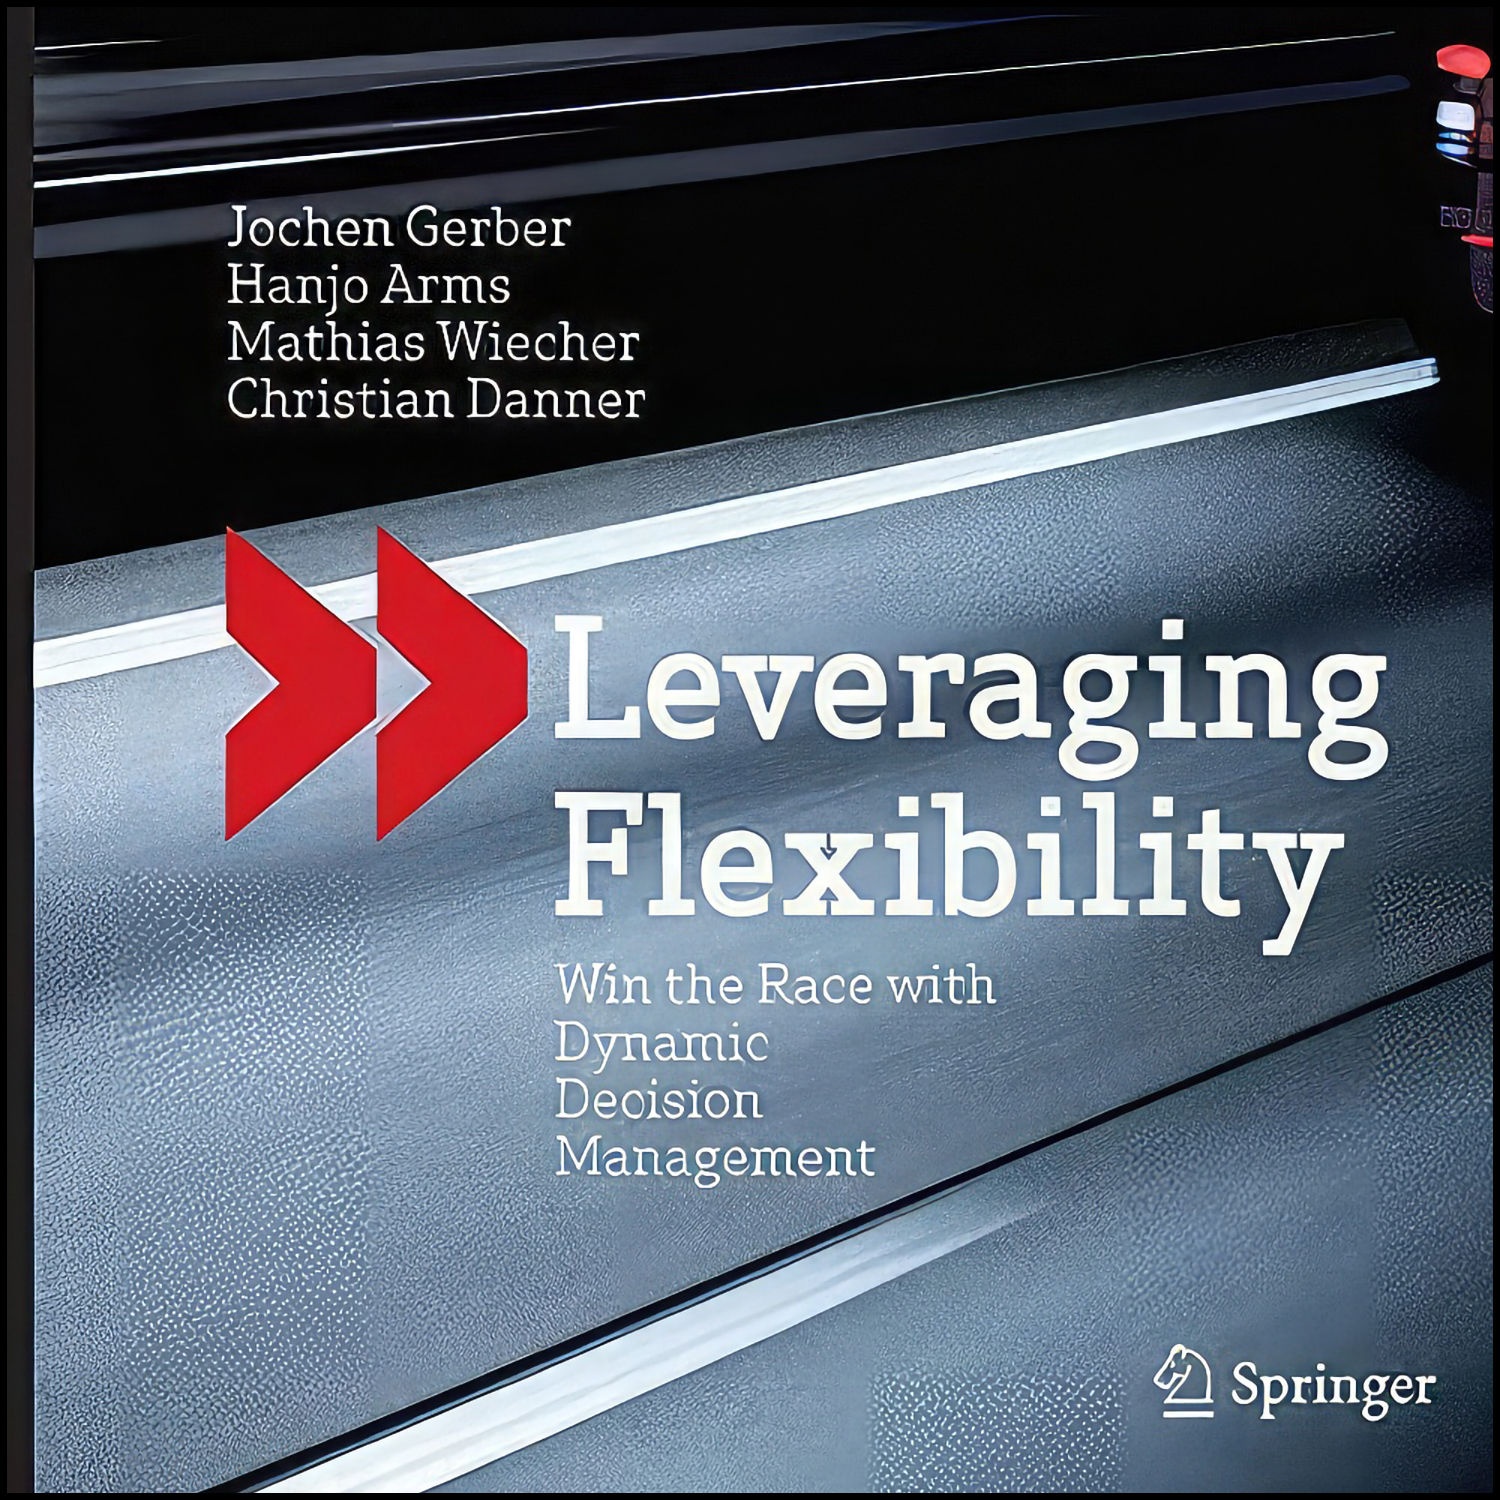 کتاب Leveraging Flexibility اثر جمعي از نويسندگان انتشارات Springer